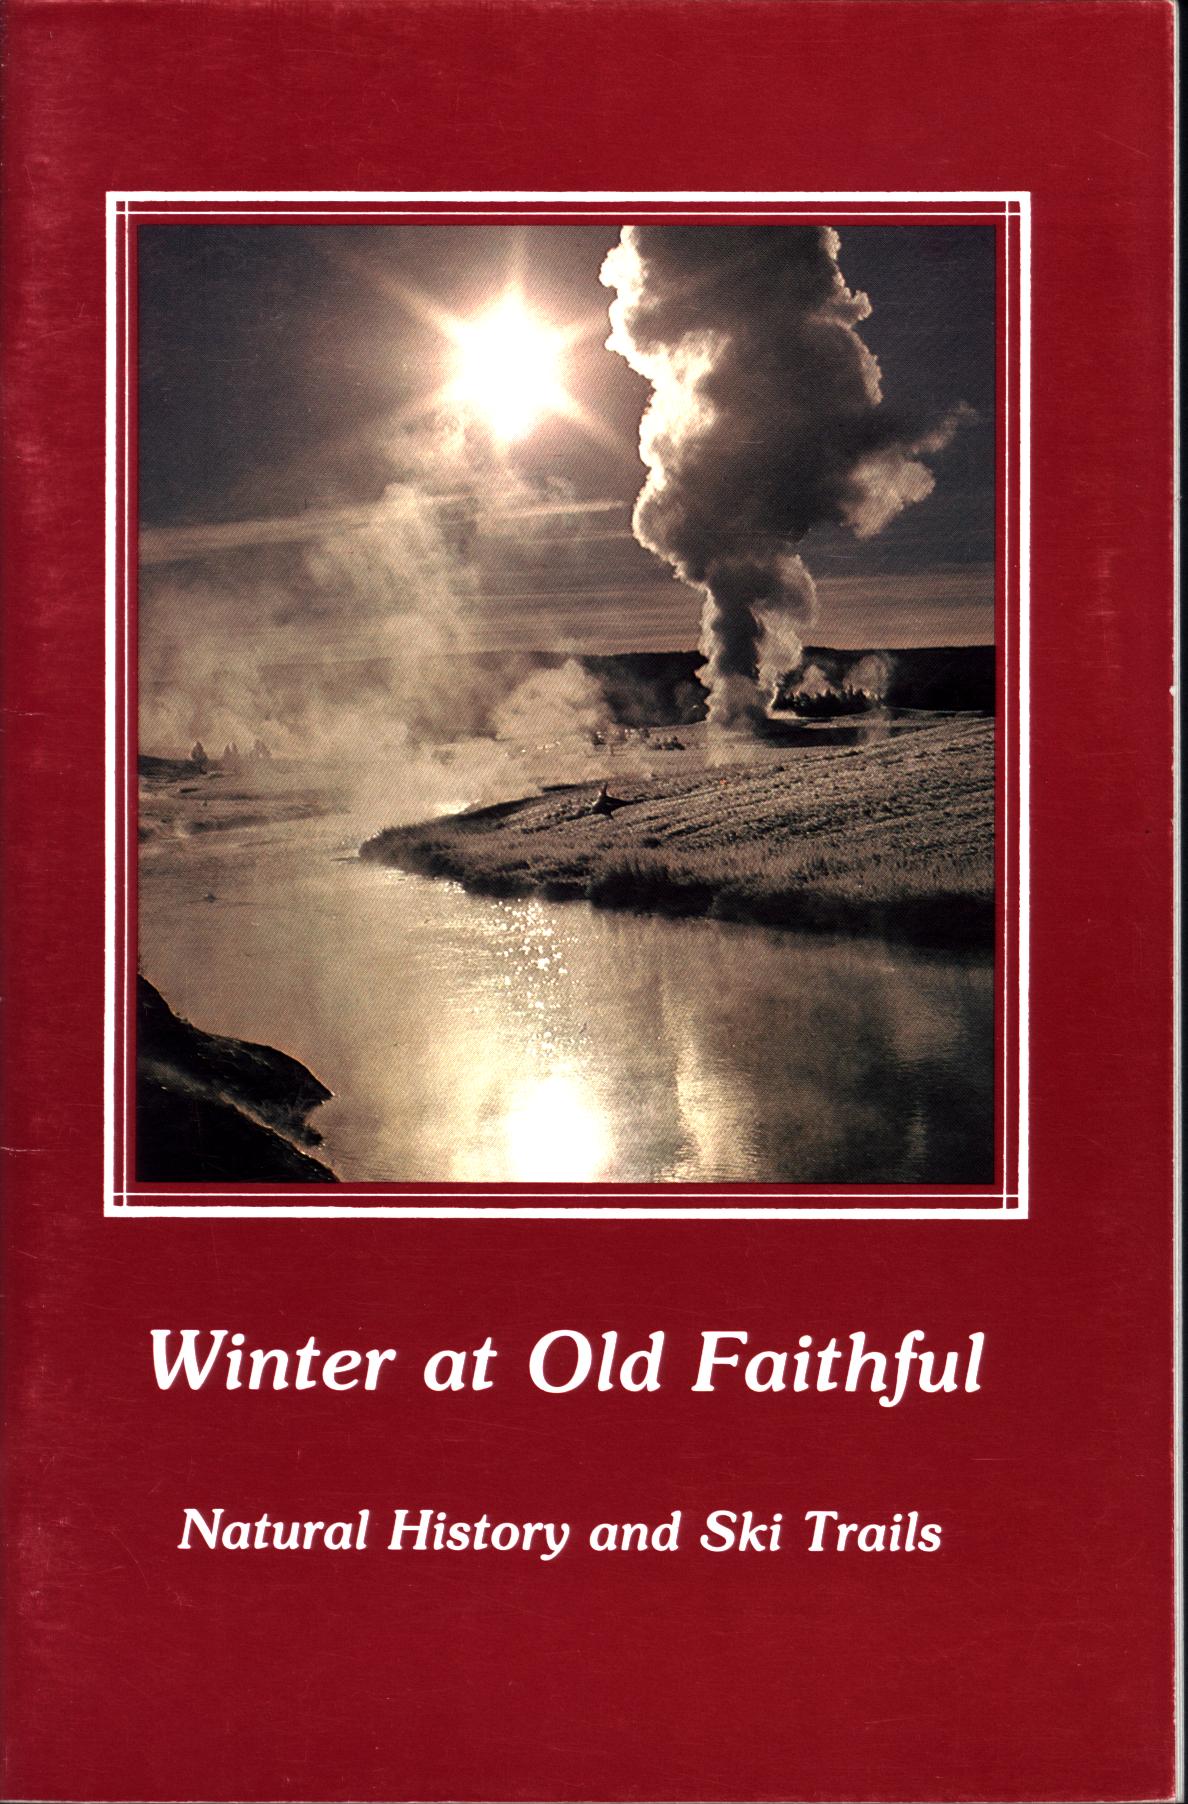 WINTER AT OLD FAITHFUL: natural history and ski trails.